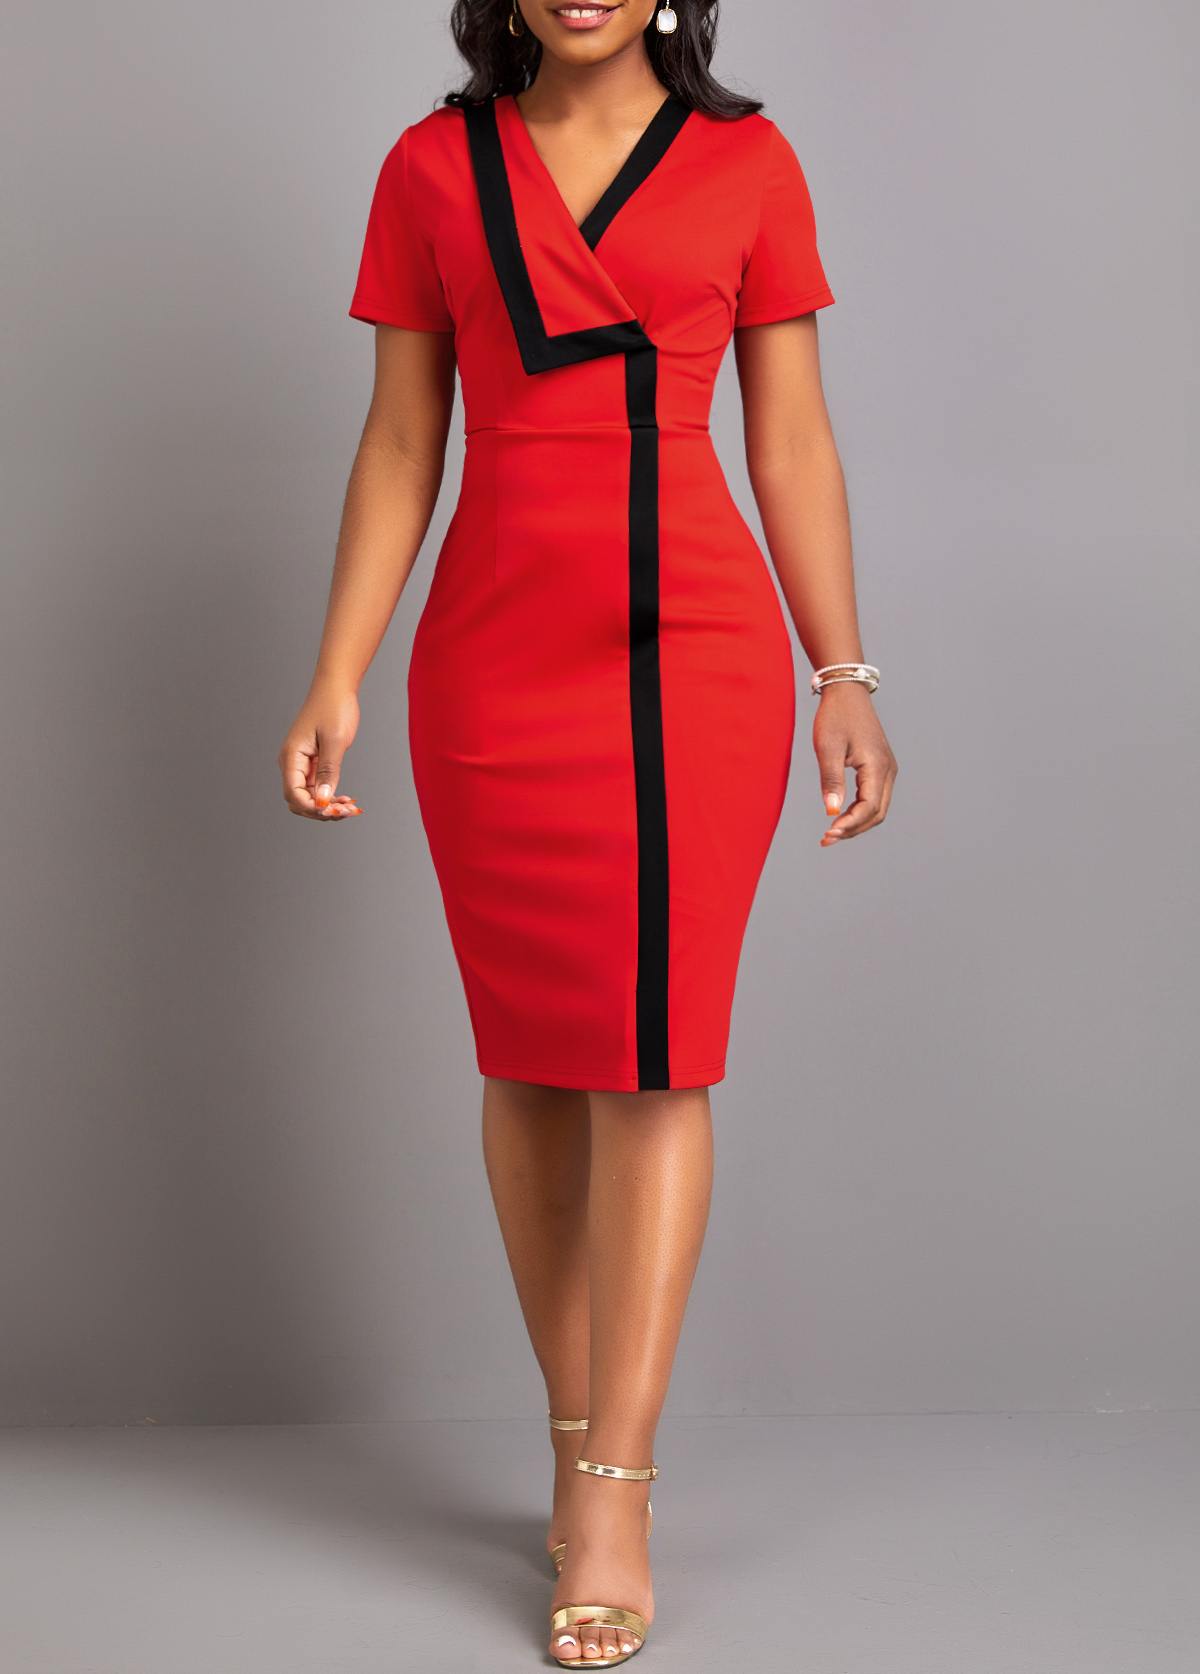 Patchwork Red Short Sleeve V Neck Bodycon Dress